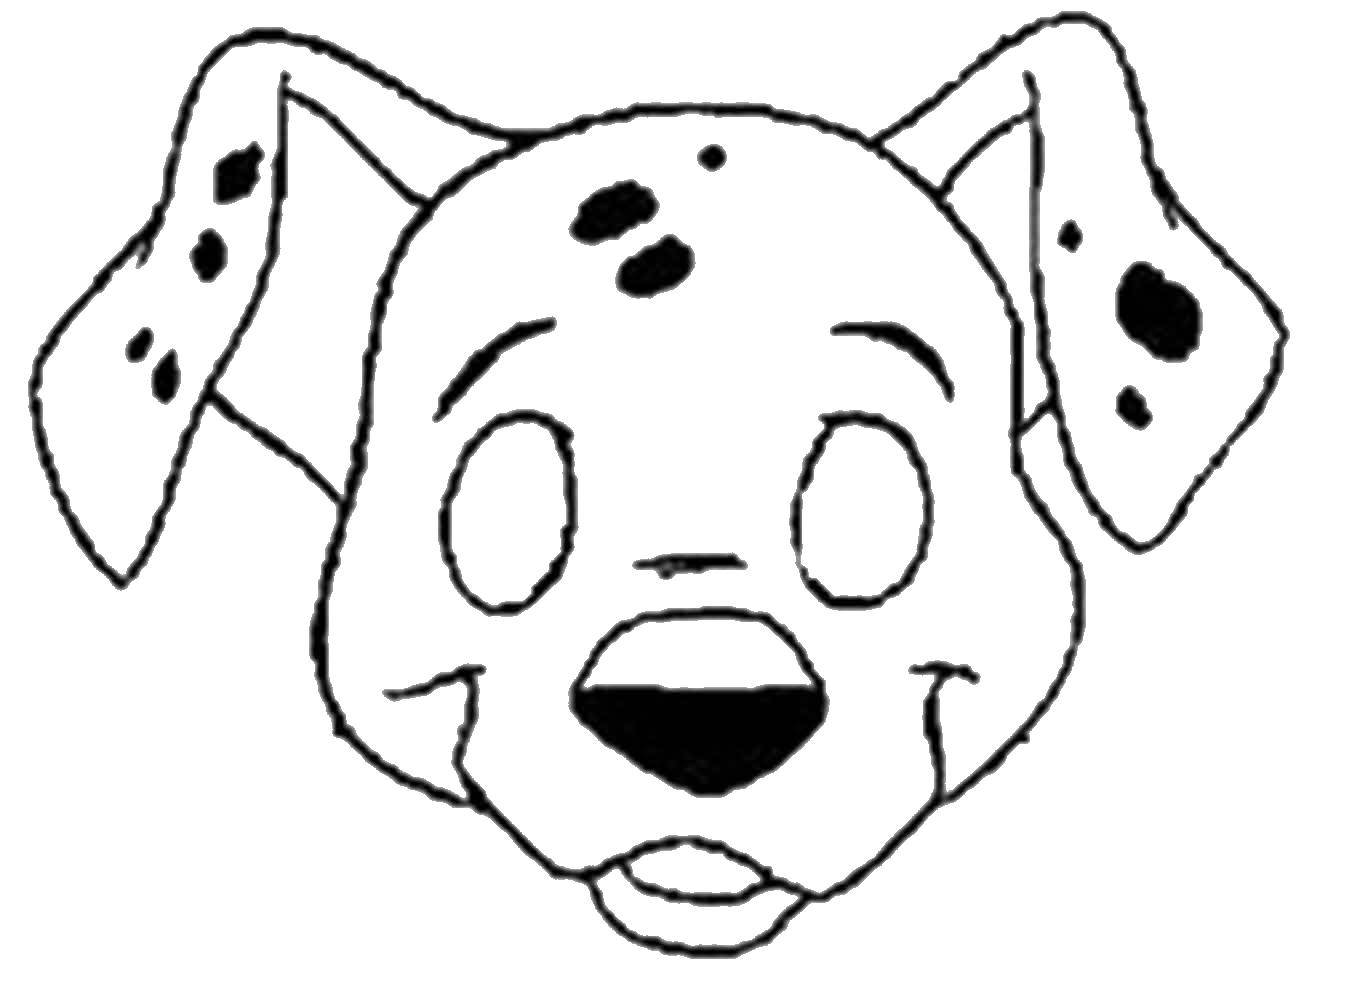 Coloring Mask Dalmatians. Category Masks . Tags:  mask, Dalmatians, dog.